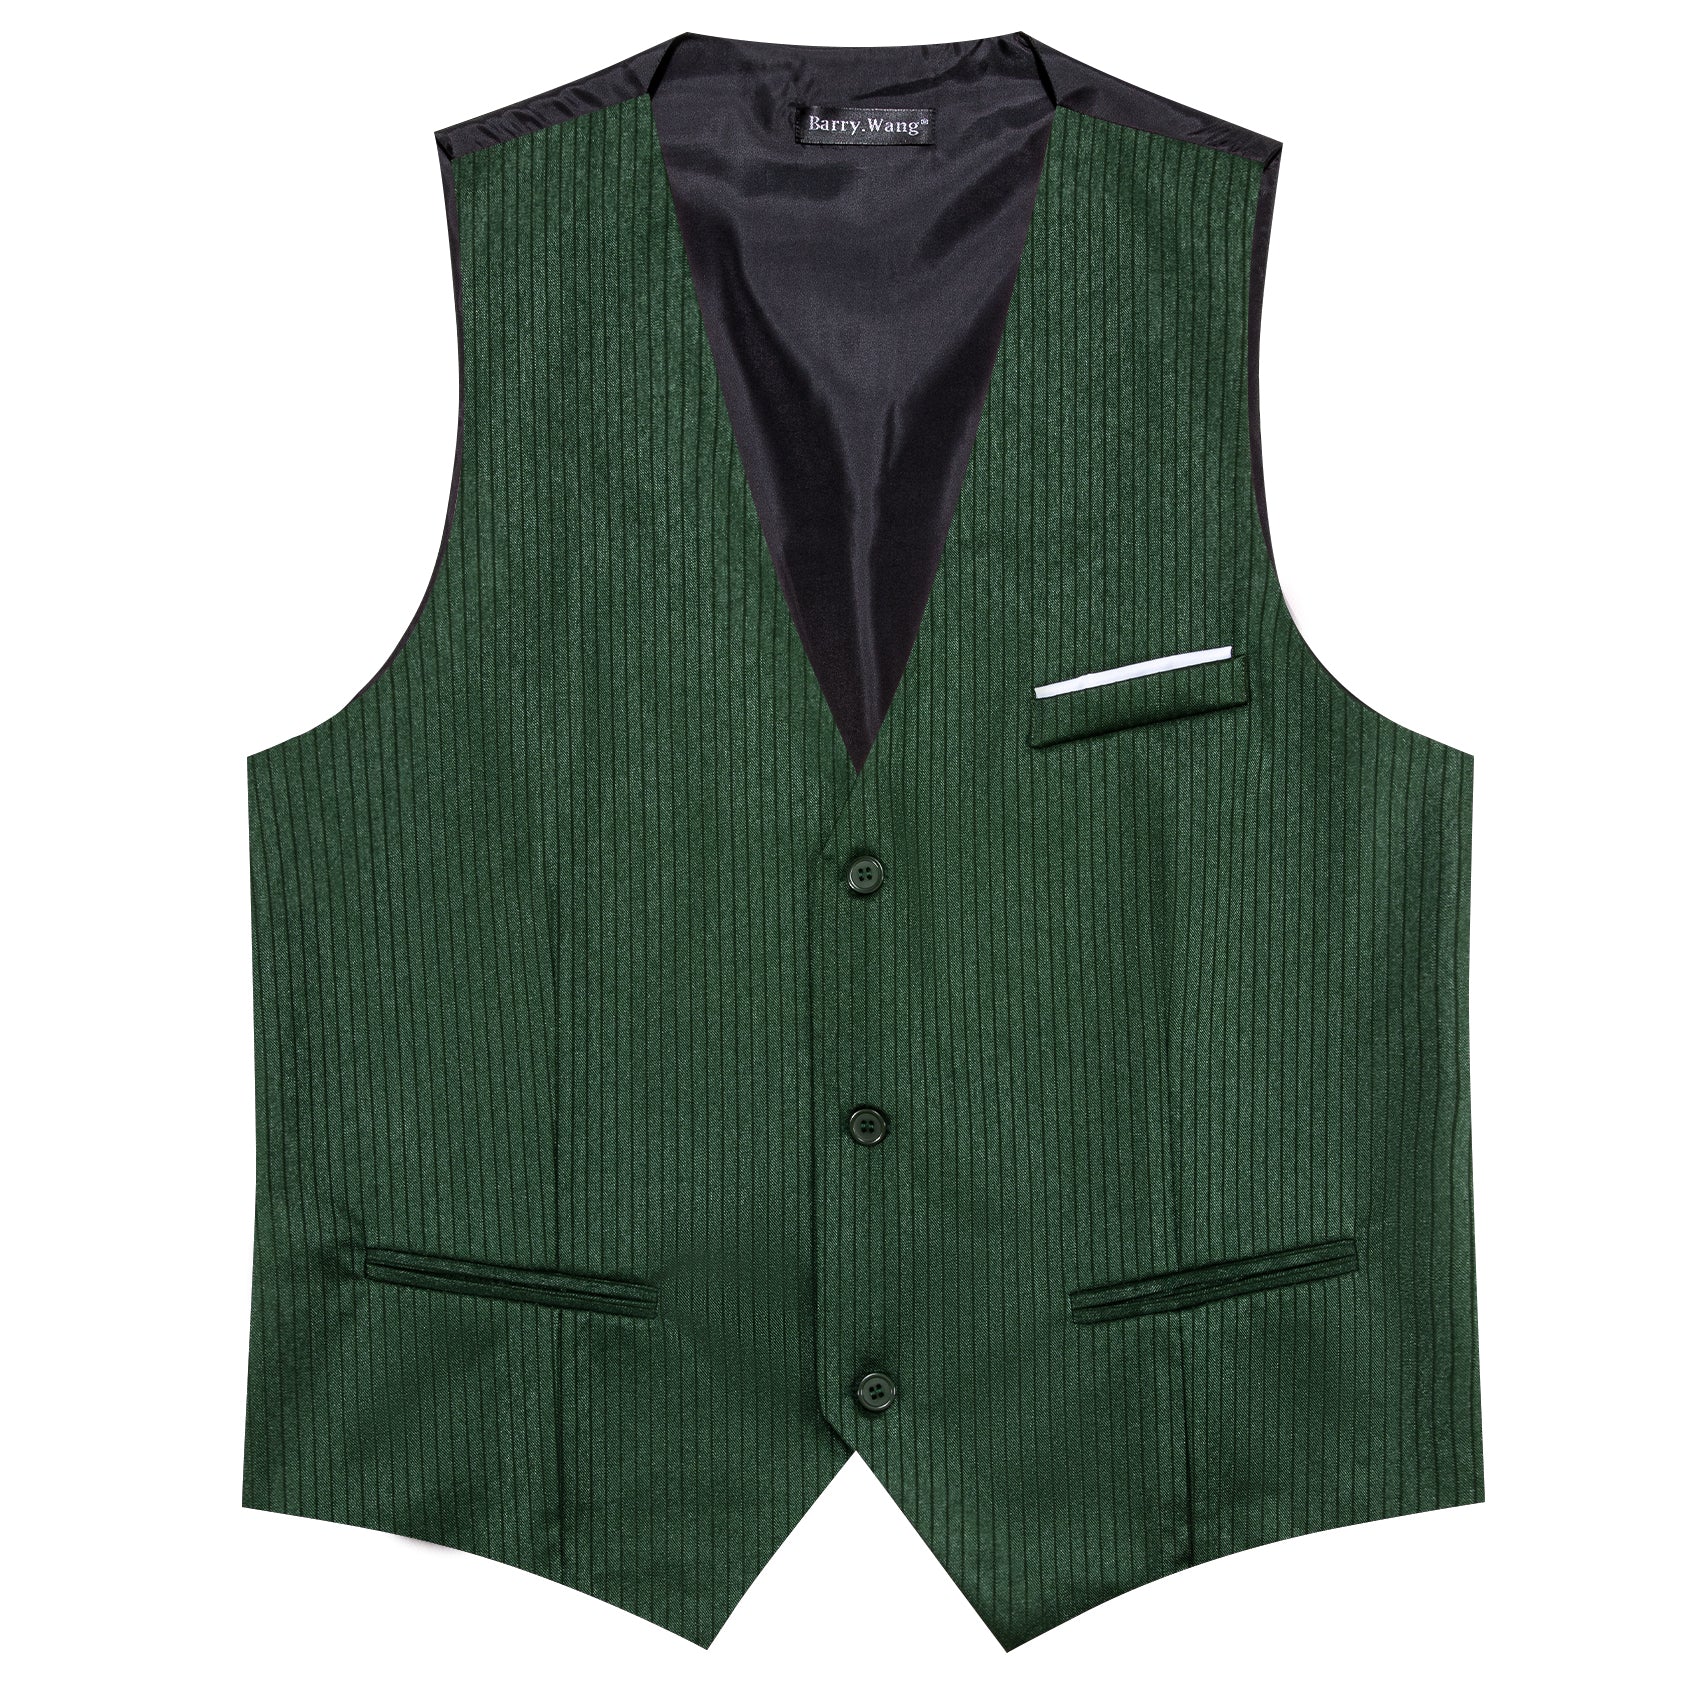 Barry.wang Dark Green Solid Business Vest Suit